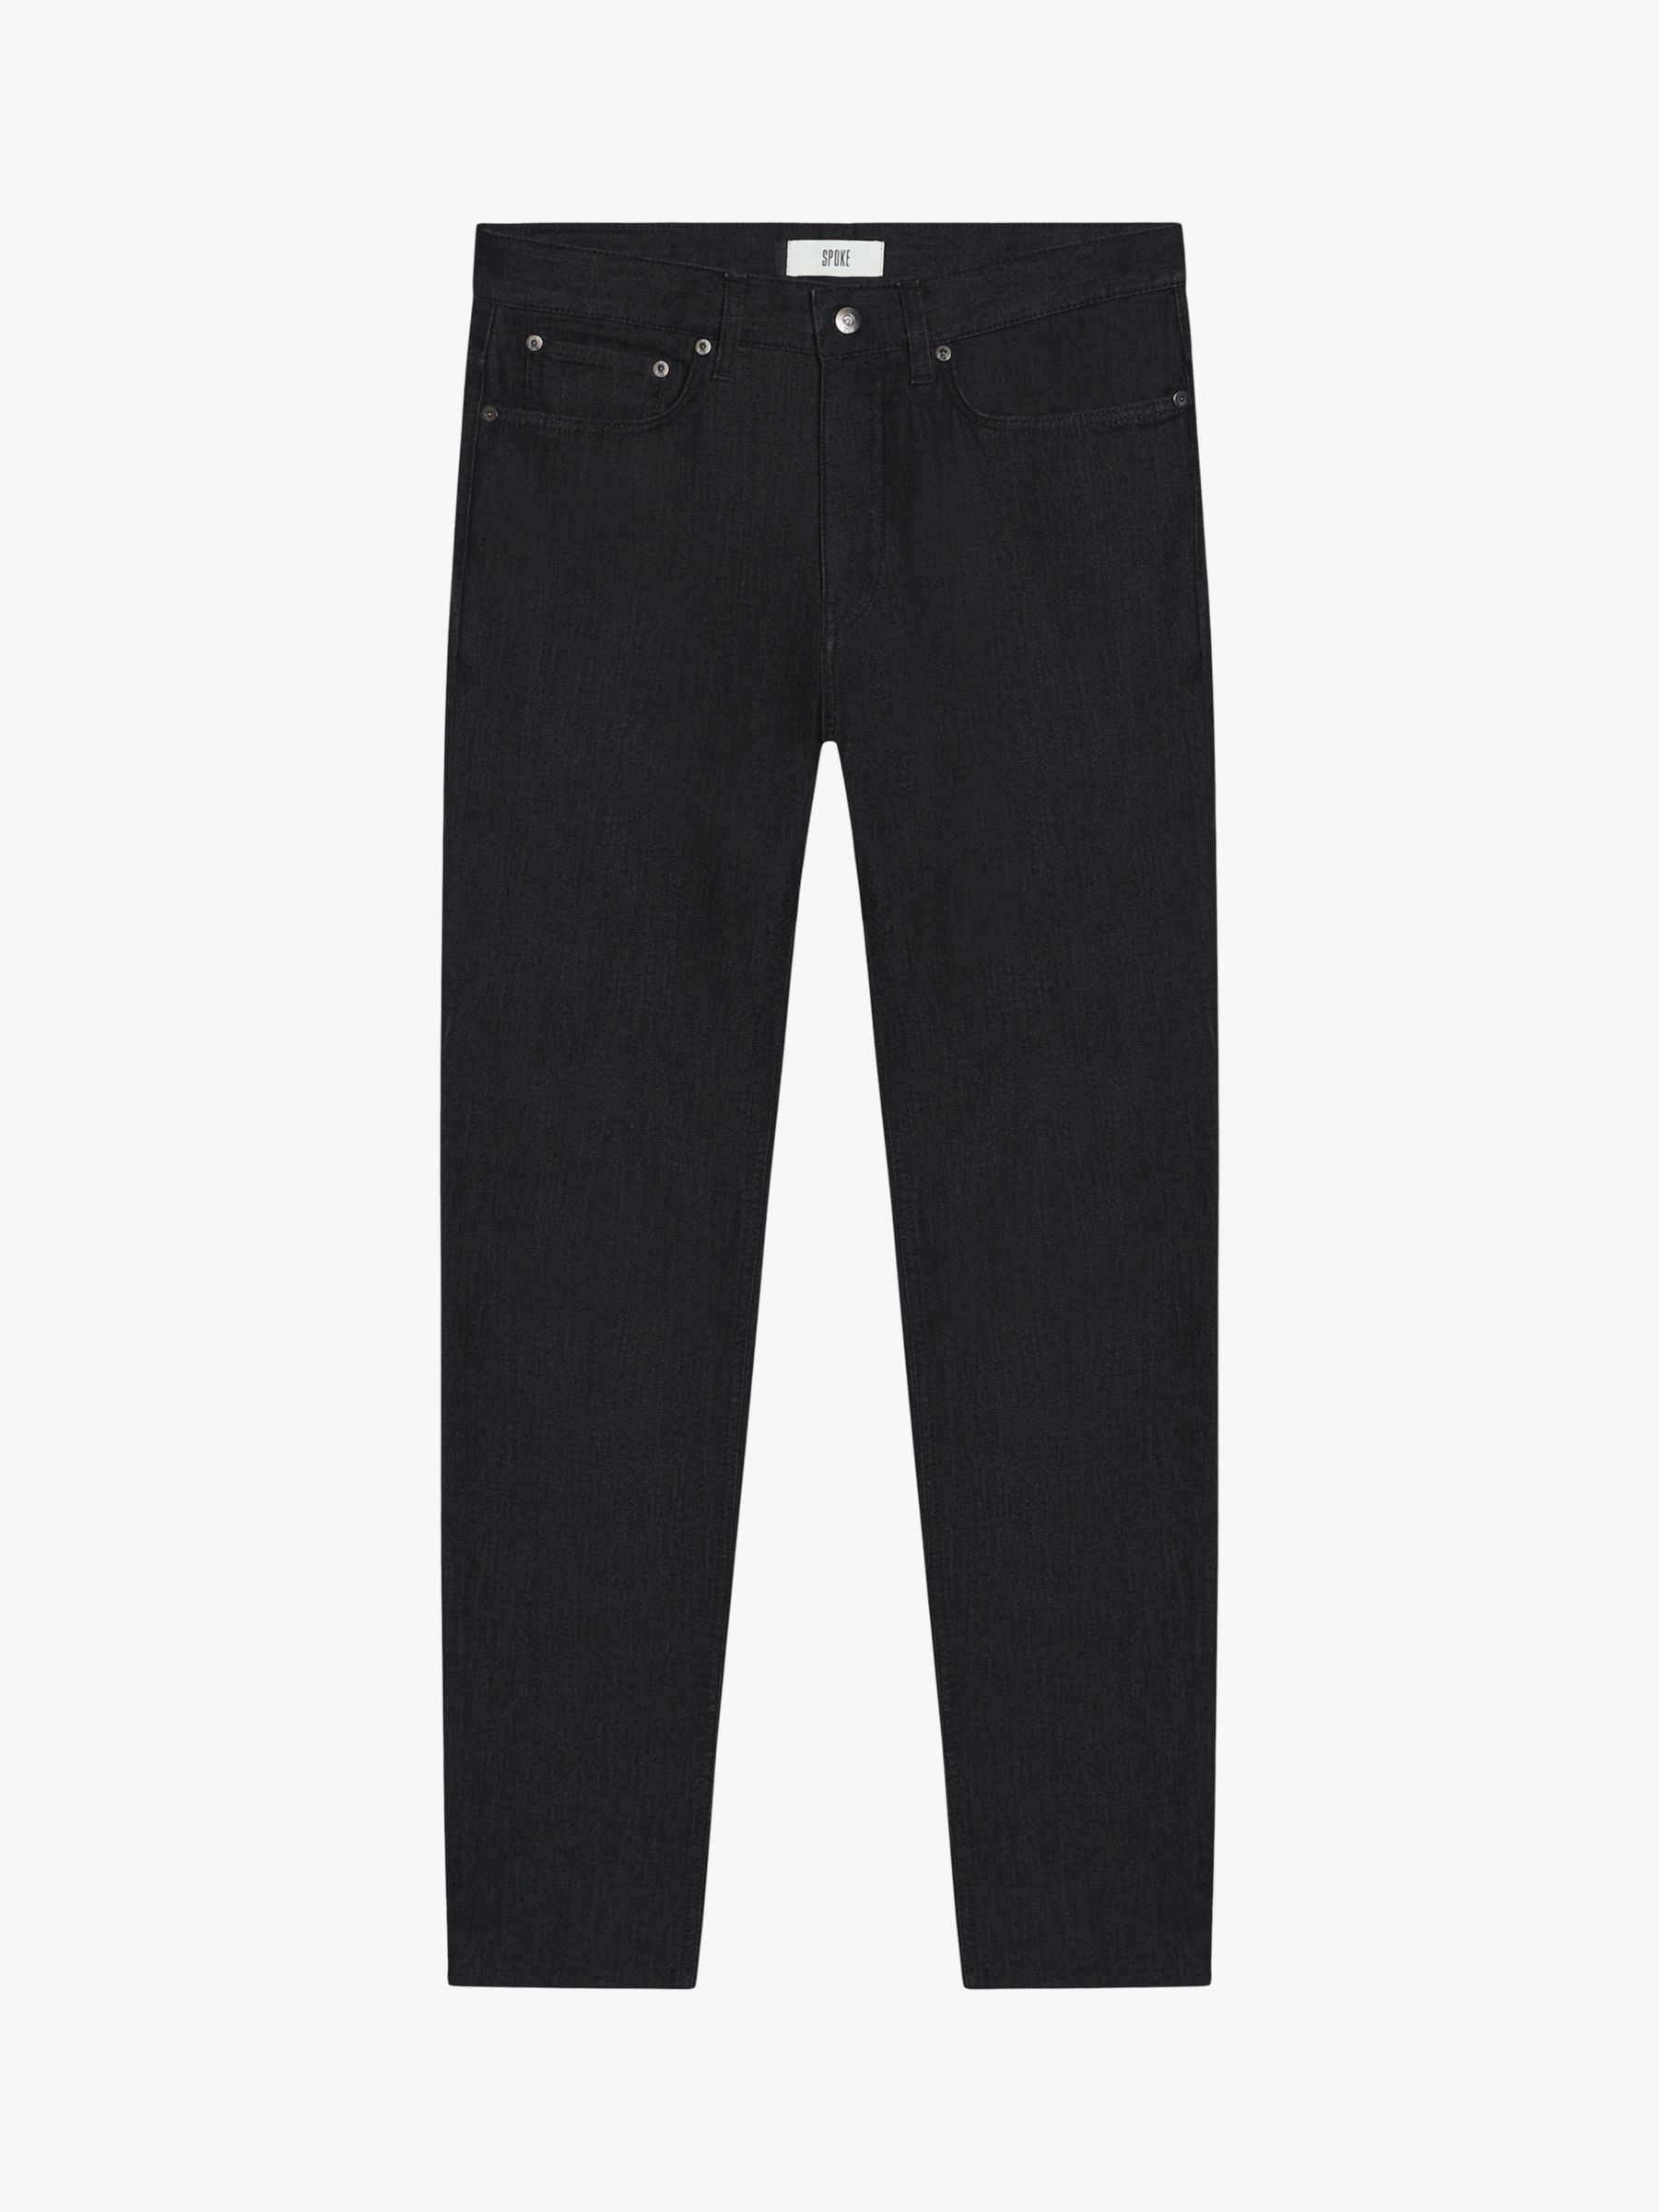 SPOKE 12oz Denim Narrow Thigh Jeans, Charcoal at John Lewis & Partners